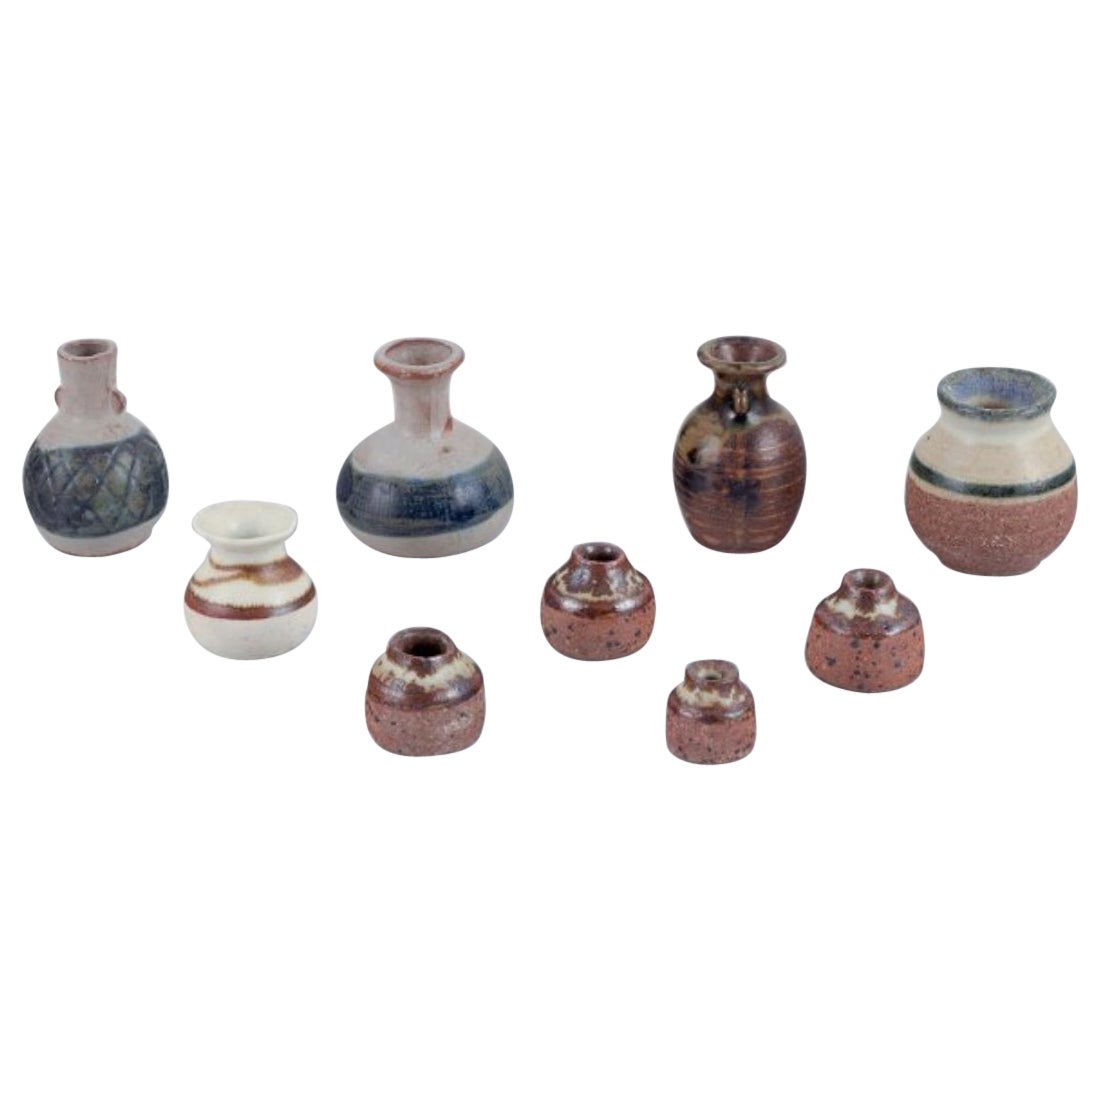 Stouby Keramik, Denmark. Collection of nine miniature ceramic vases. For Sale